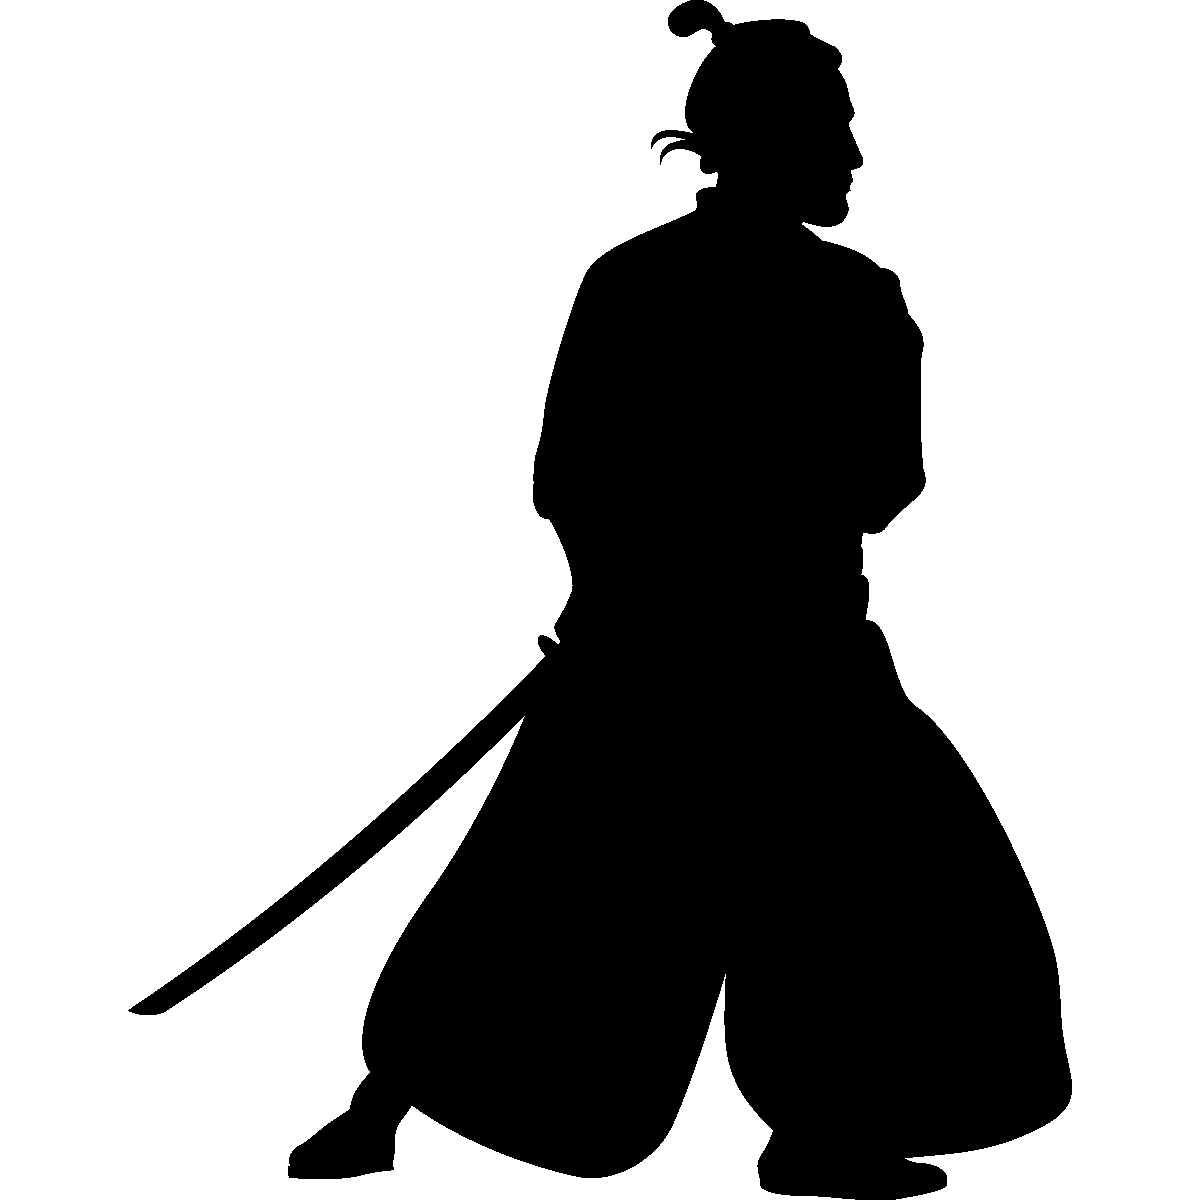 Samurai clipart silhouette. Png image purepng free